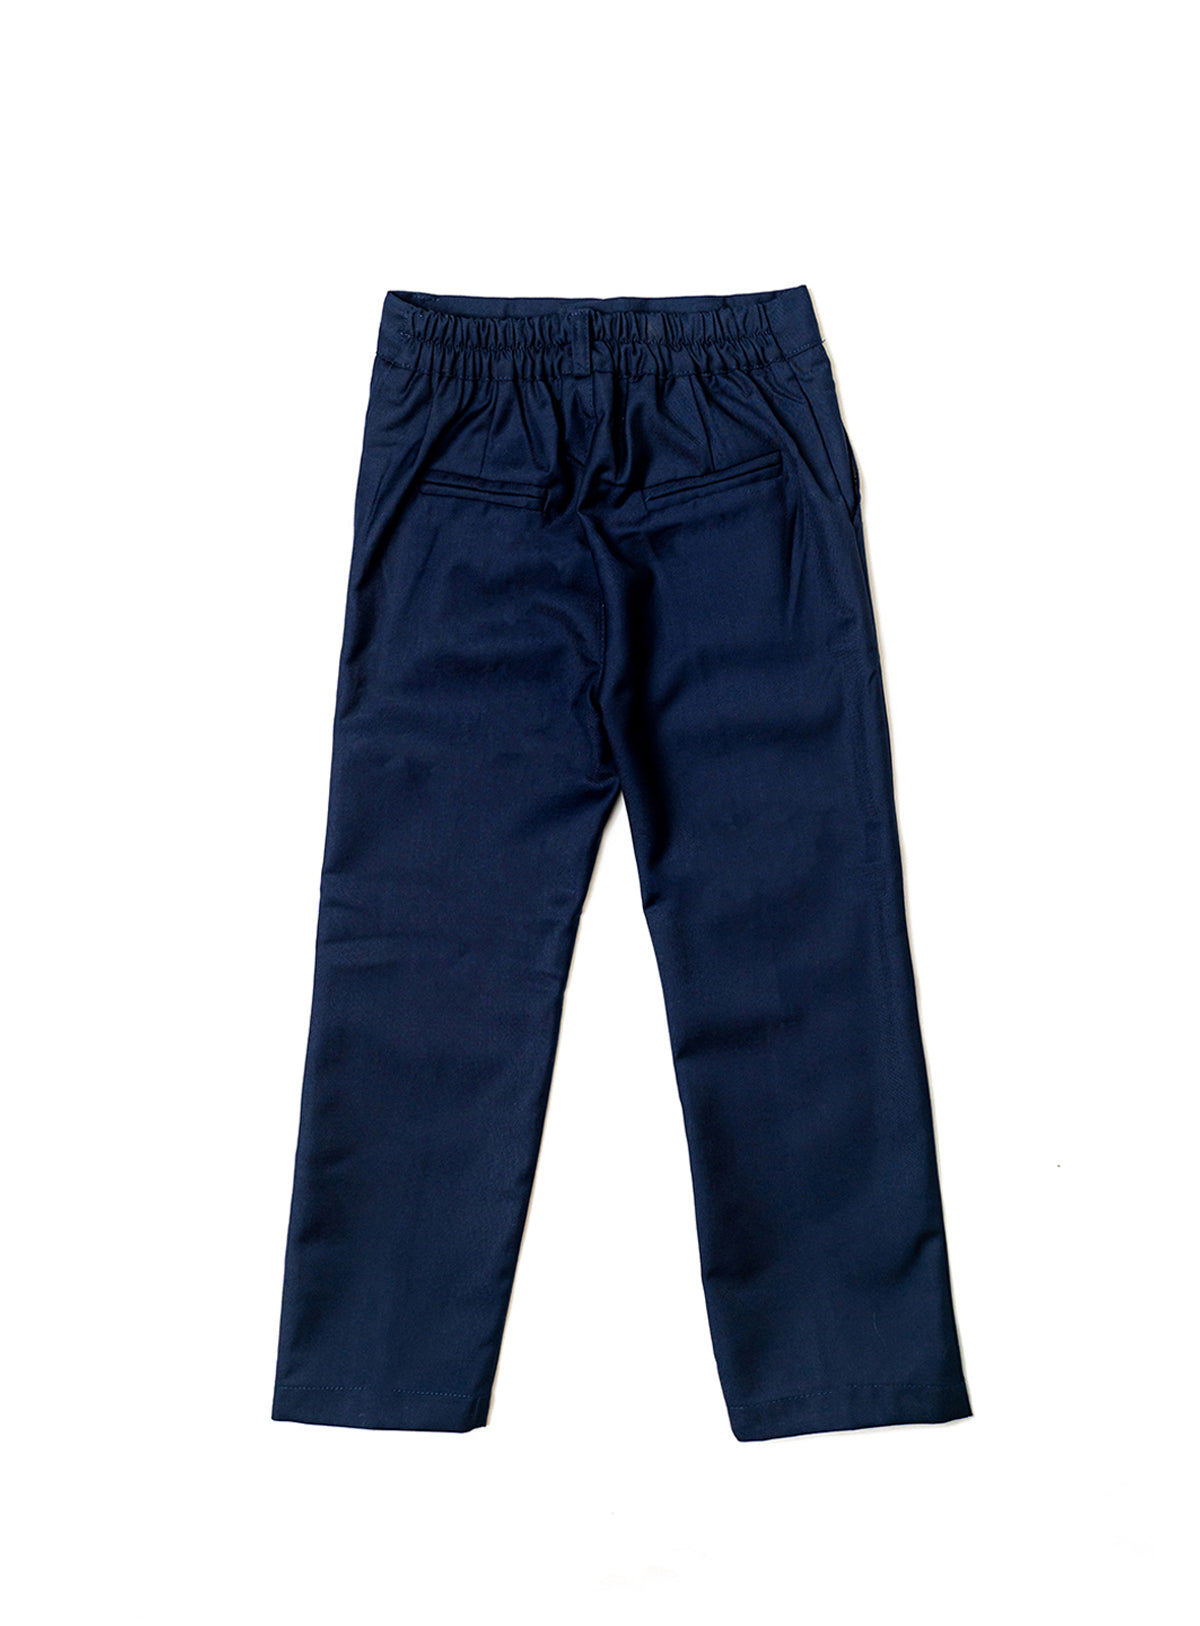 indigo blue straight cut pants